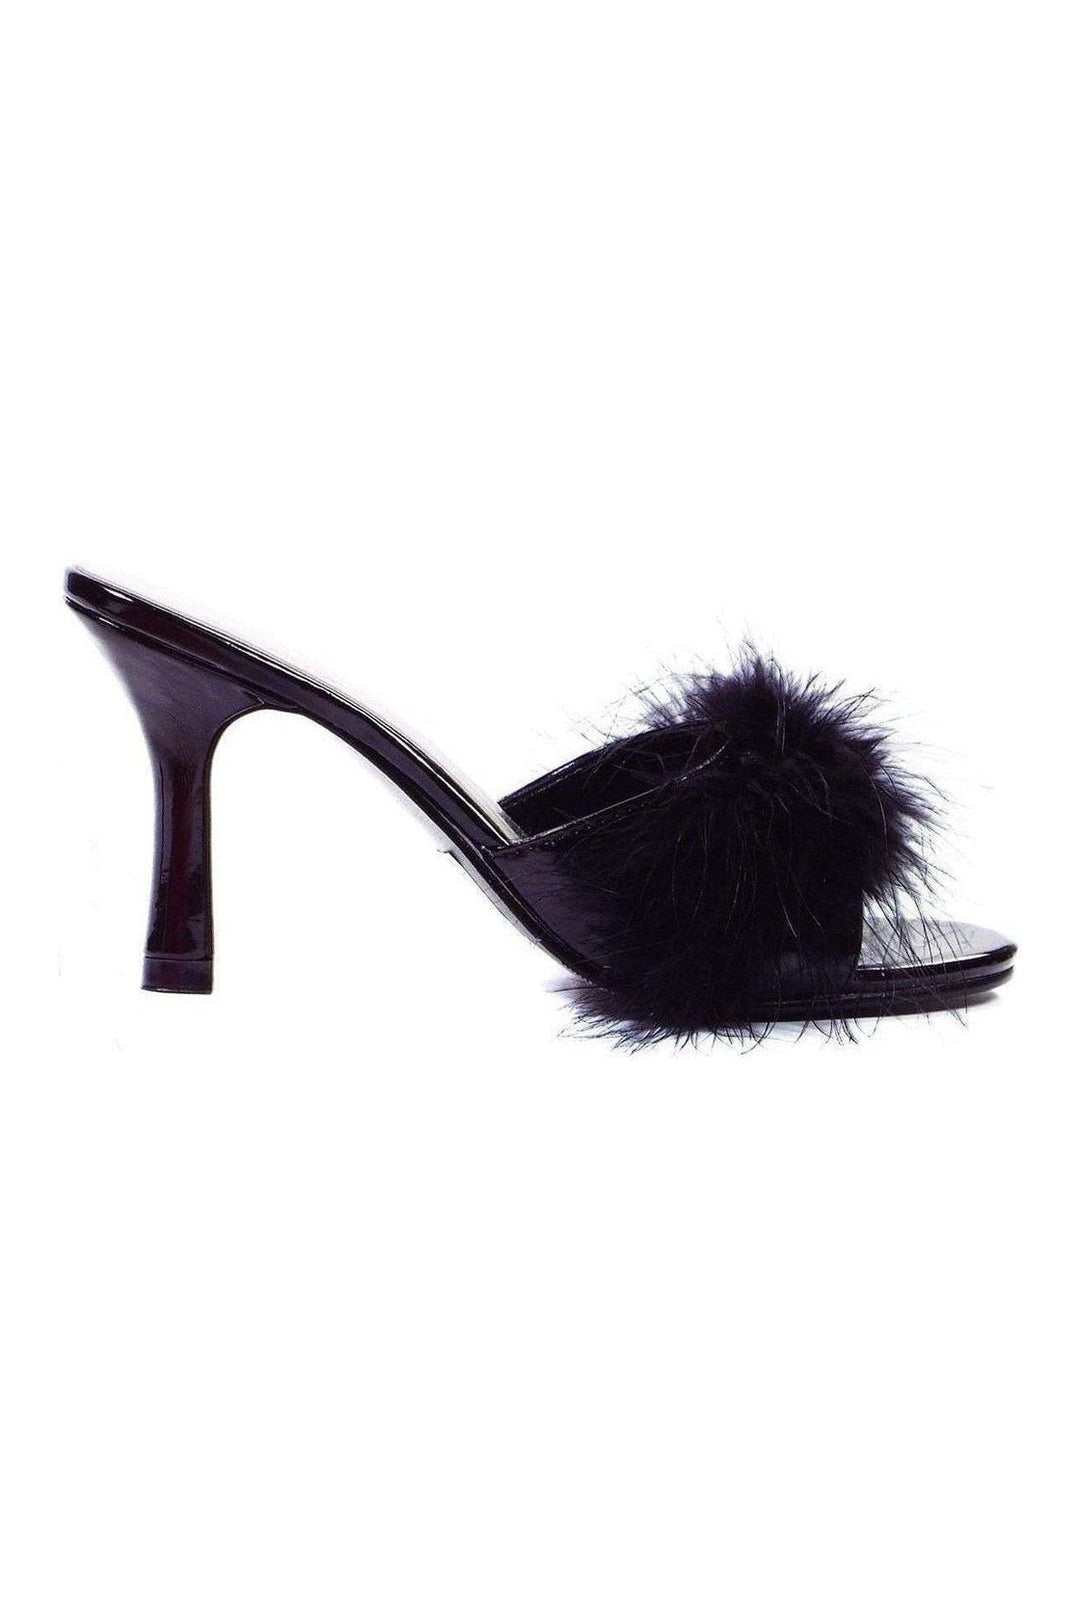 361-SASHA Marabou | Black Patent-Ellie Shoes-Black-Marabous-SEXYSHOES.COM